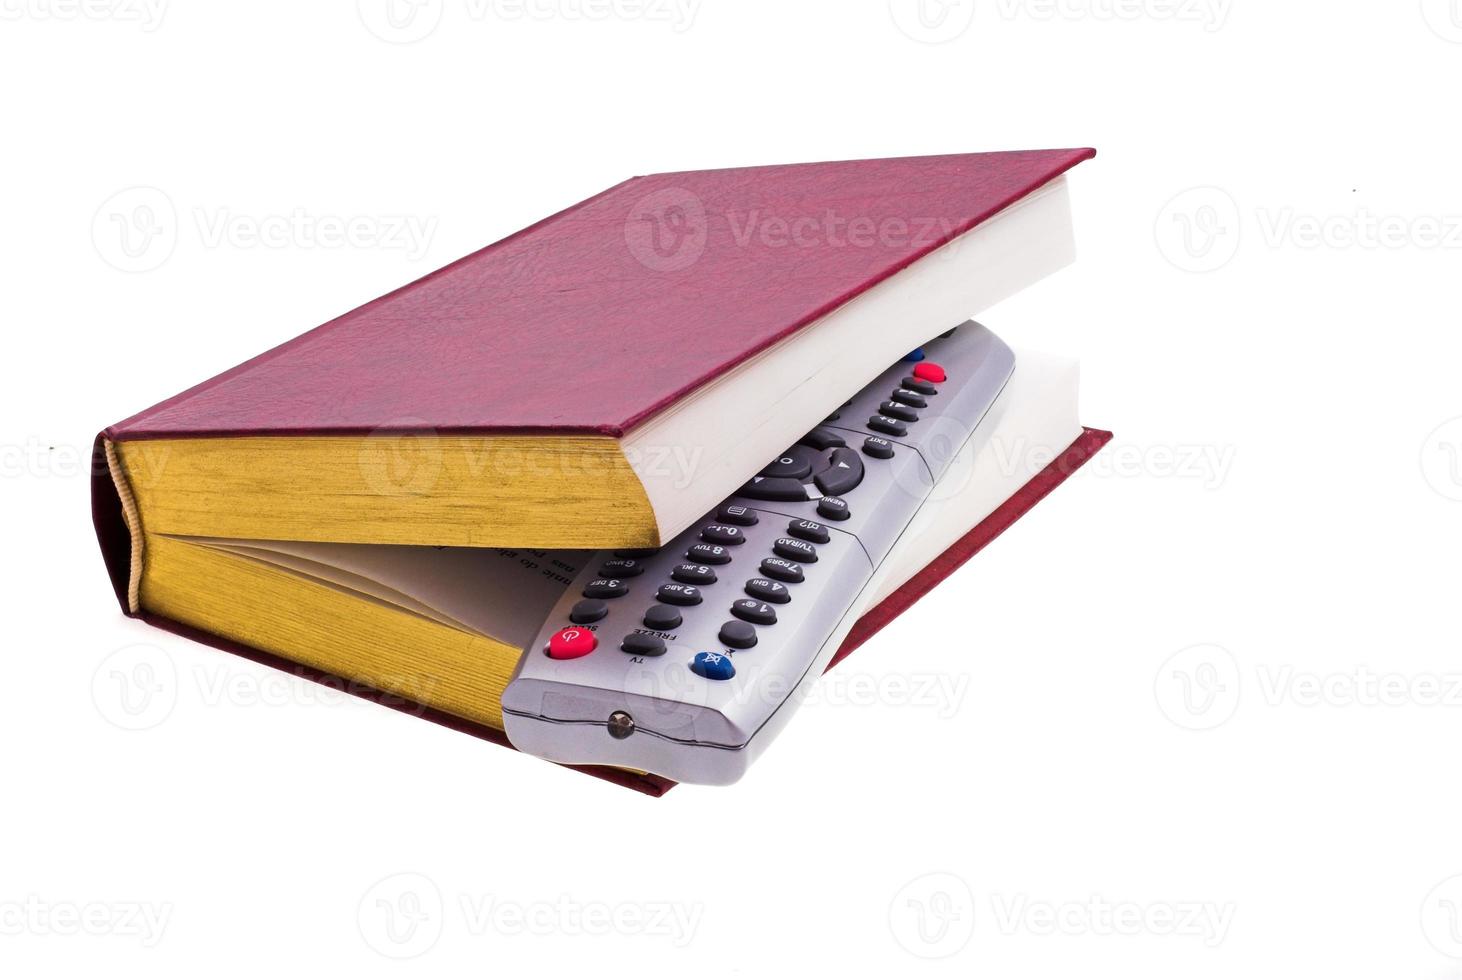 TV Remote and book photo